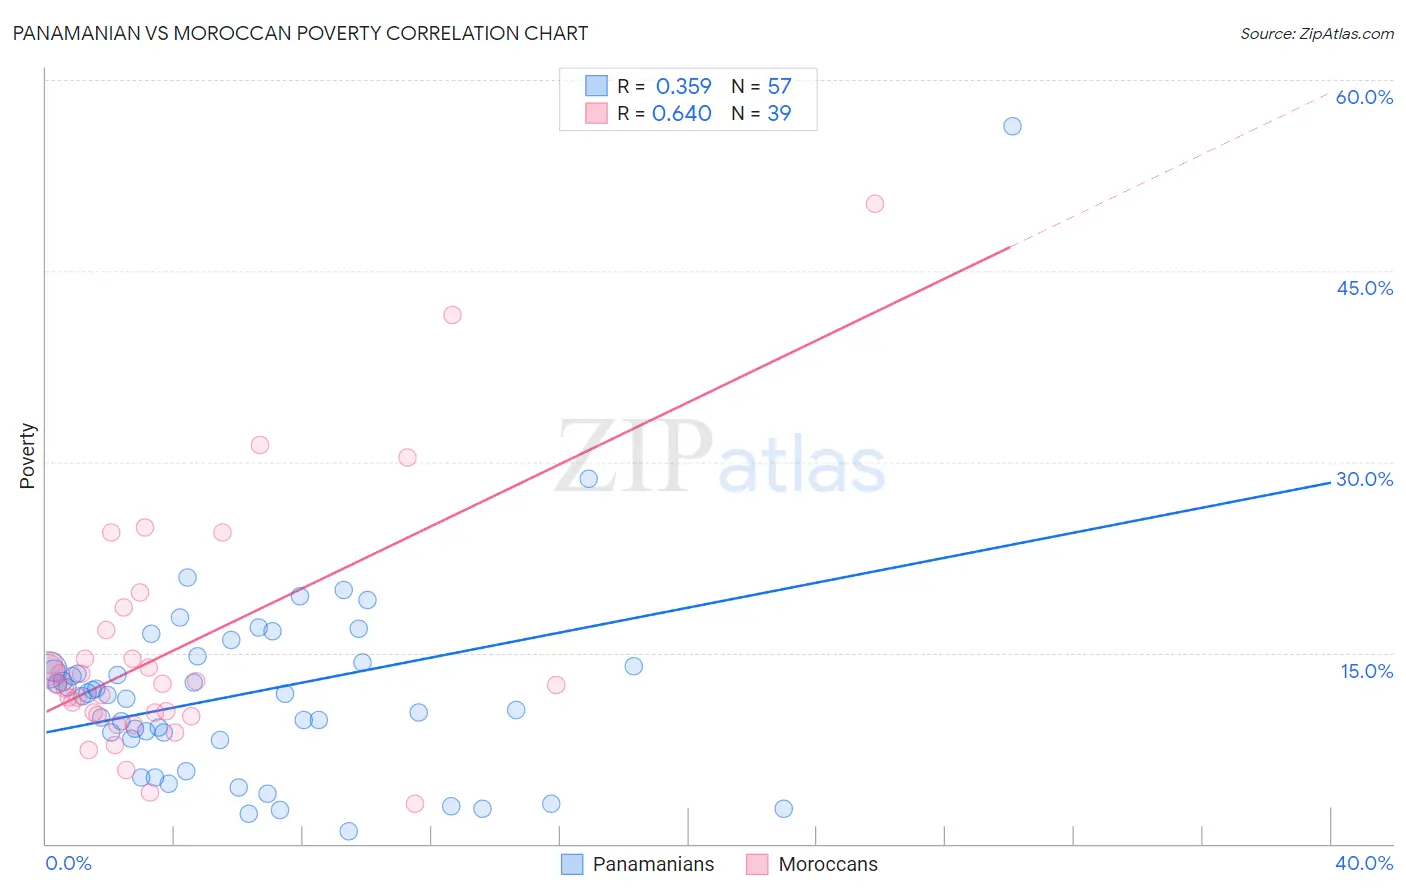 Panamanian vs Moroccan Poverty